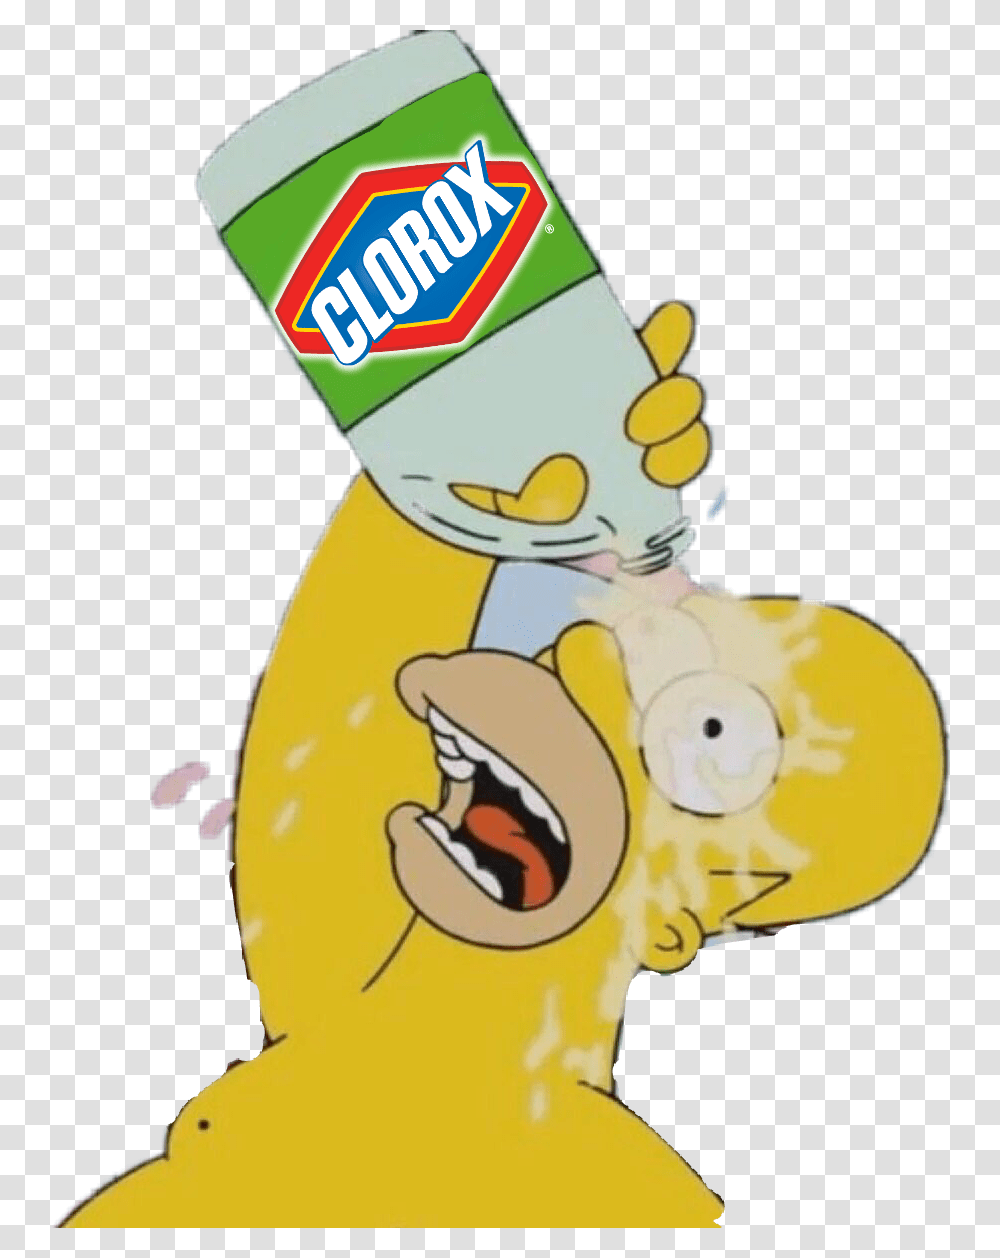 Homer Homero Thesimpsons Lossimpsons Simpson Clorox Clorox, Bottle, Beverage, Drink, Pop Bottle Transparent Png